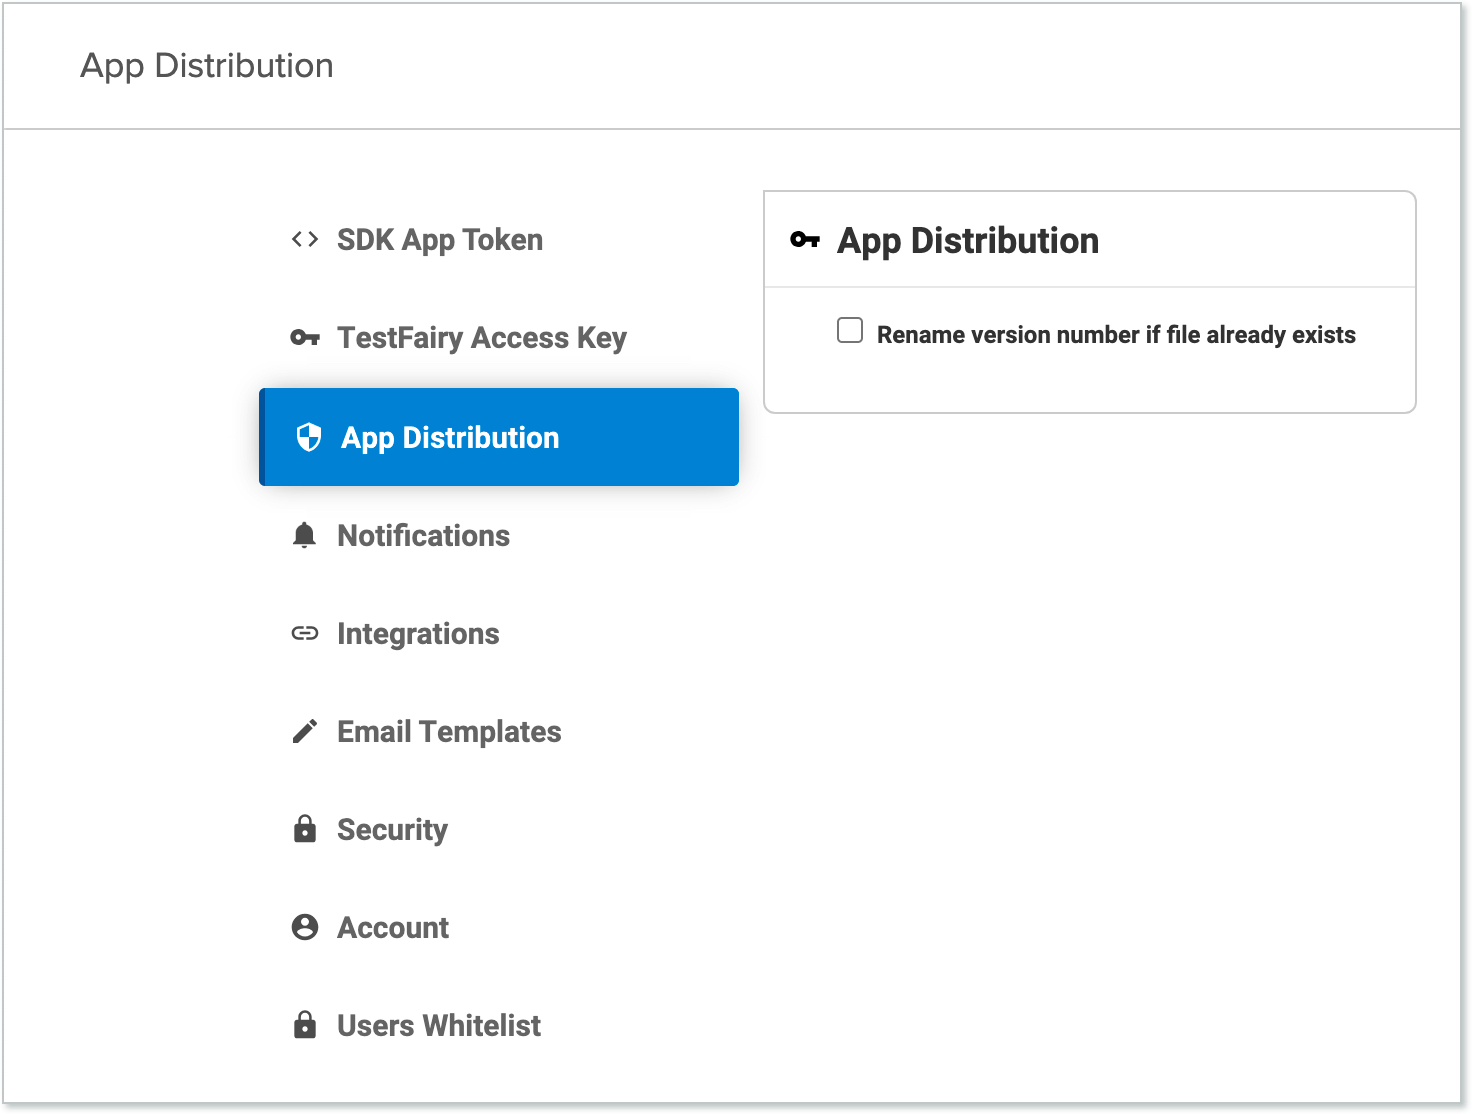 App Distribution page